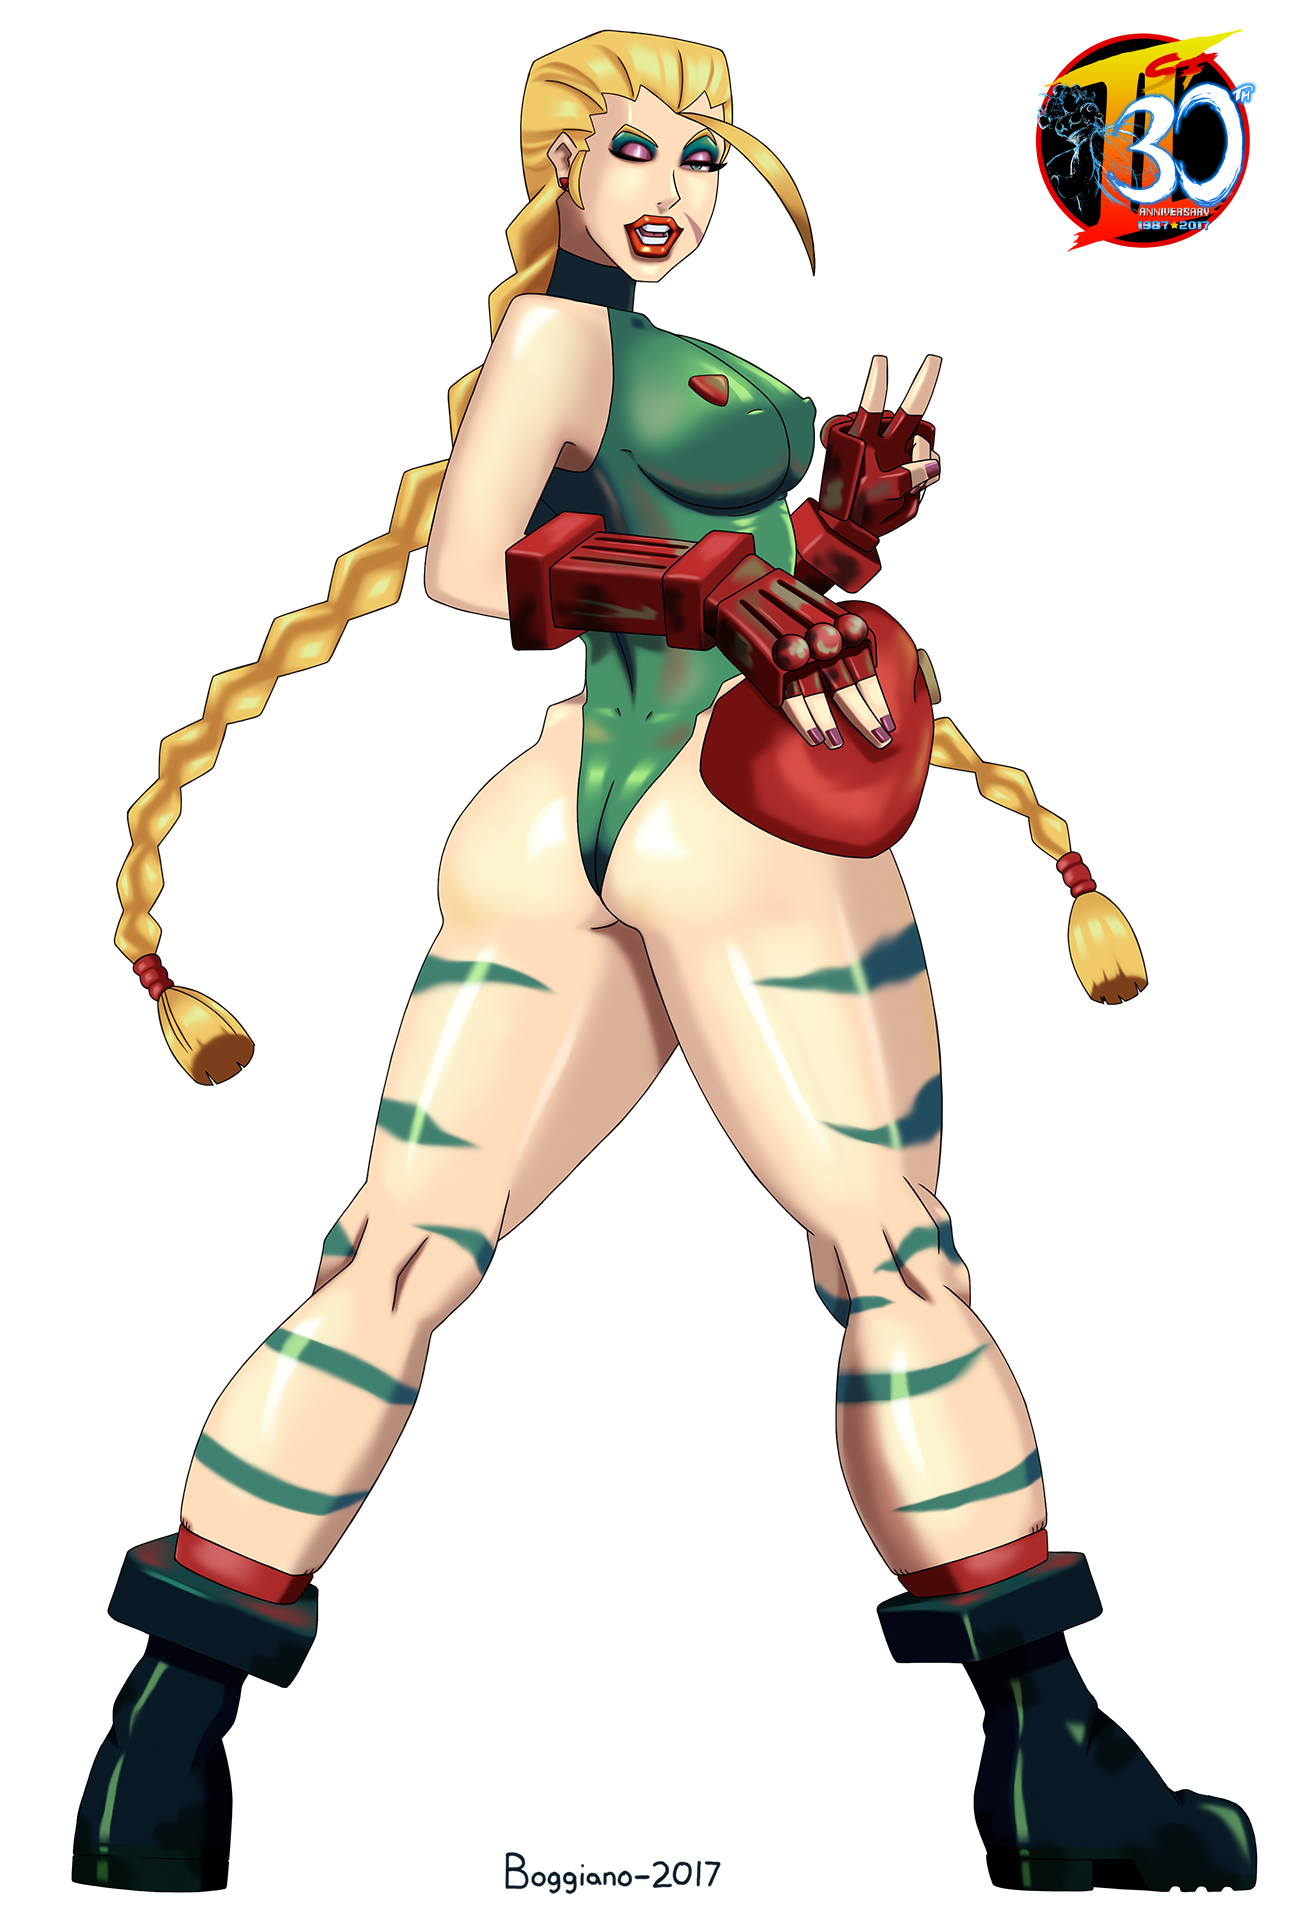 Cammy - Street Fighter Alpha 2  Street fighter characters, Street fighter  art, Street fighter